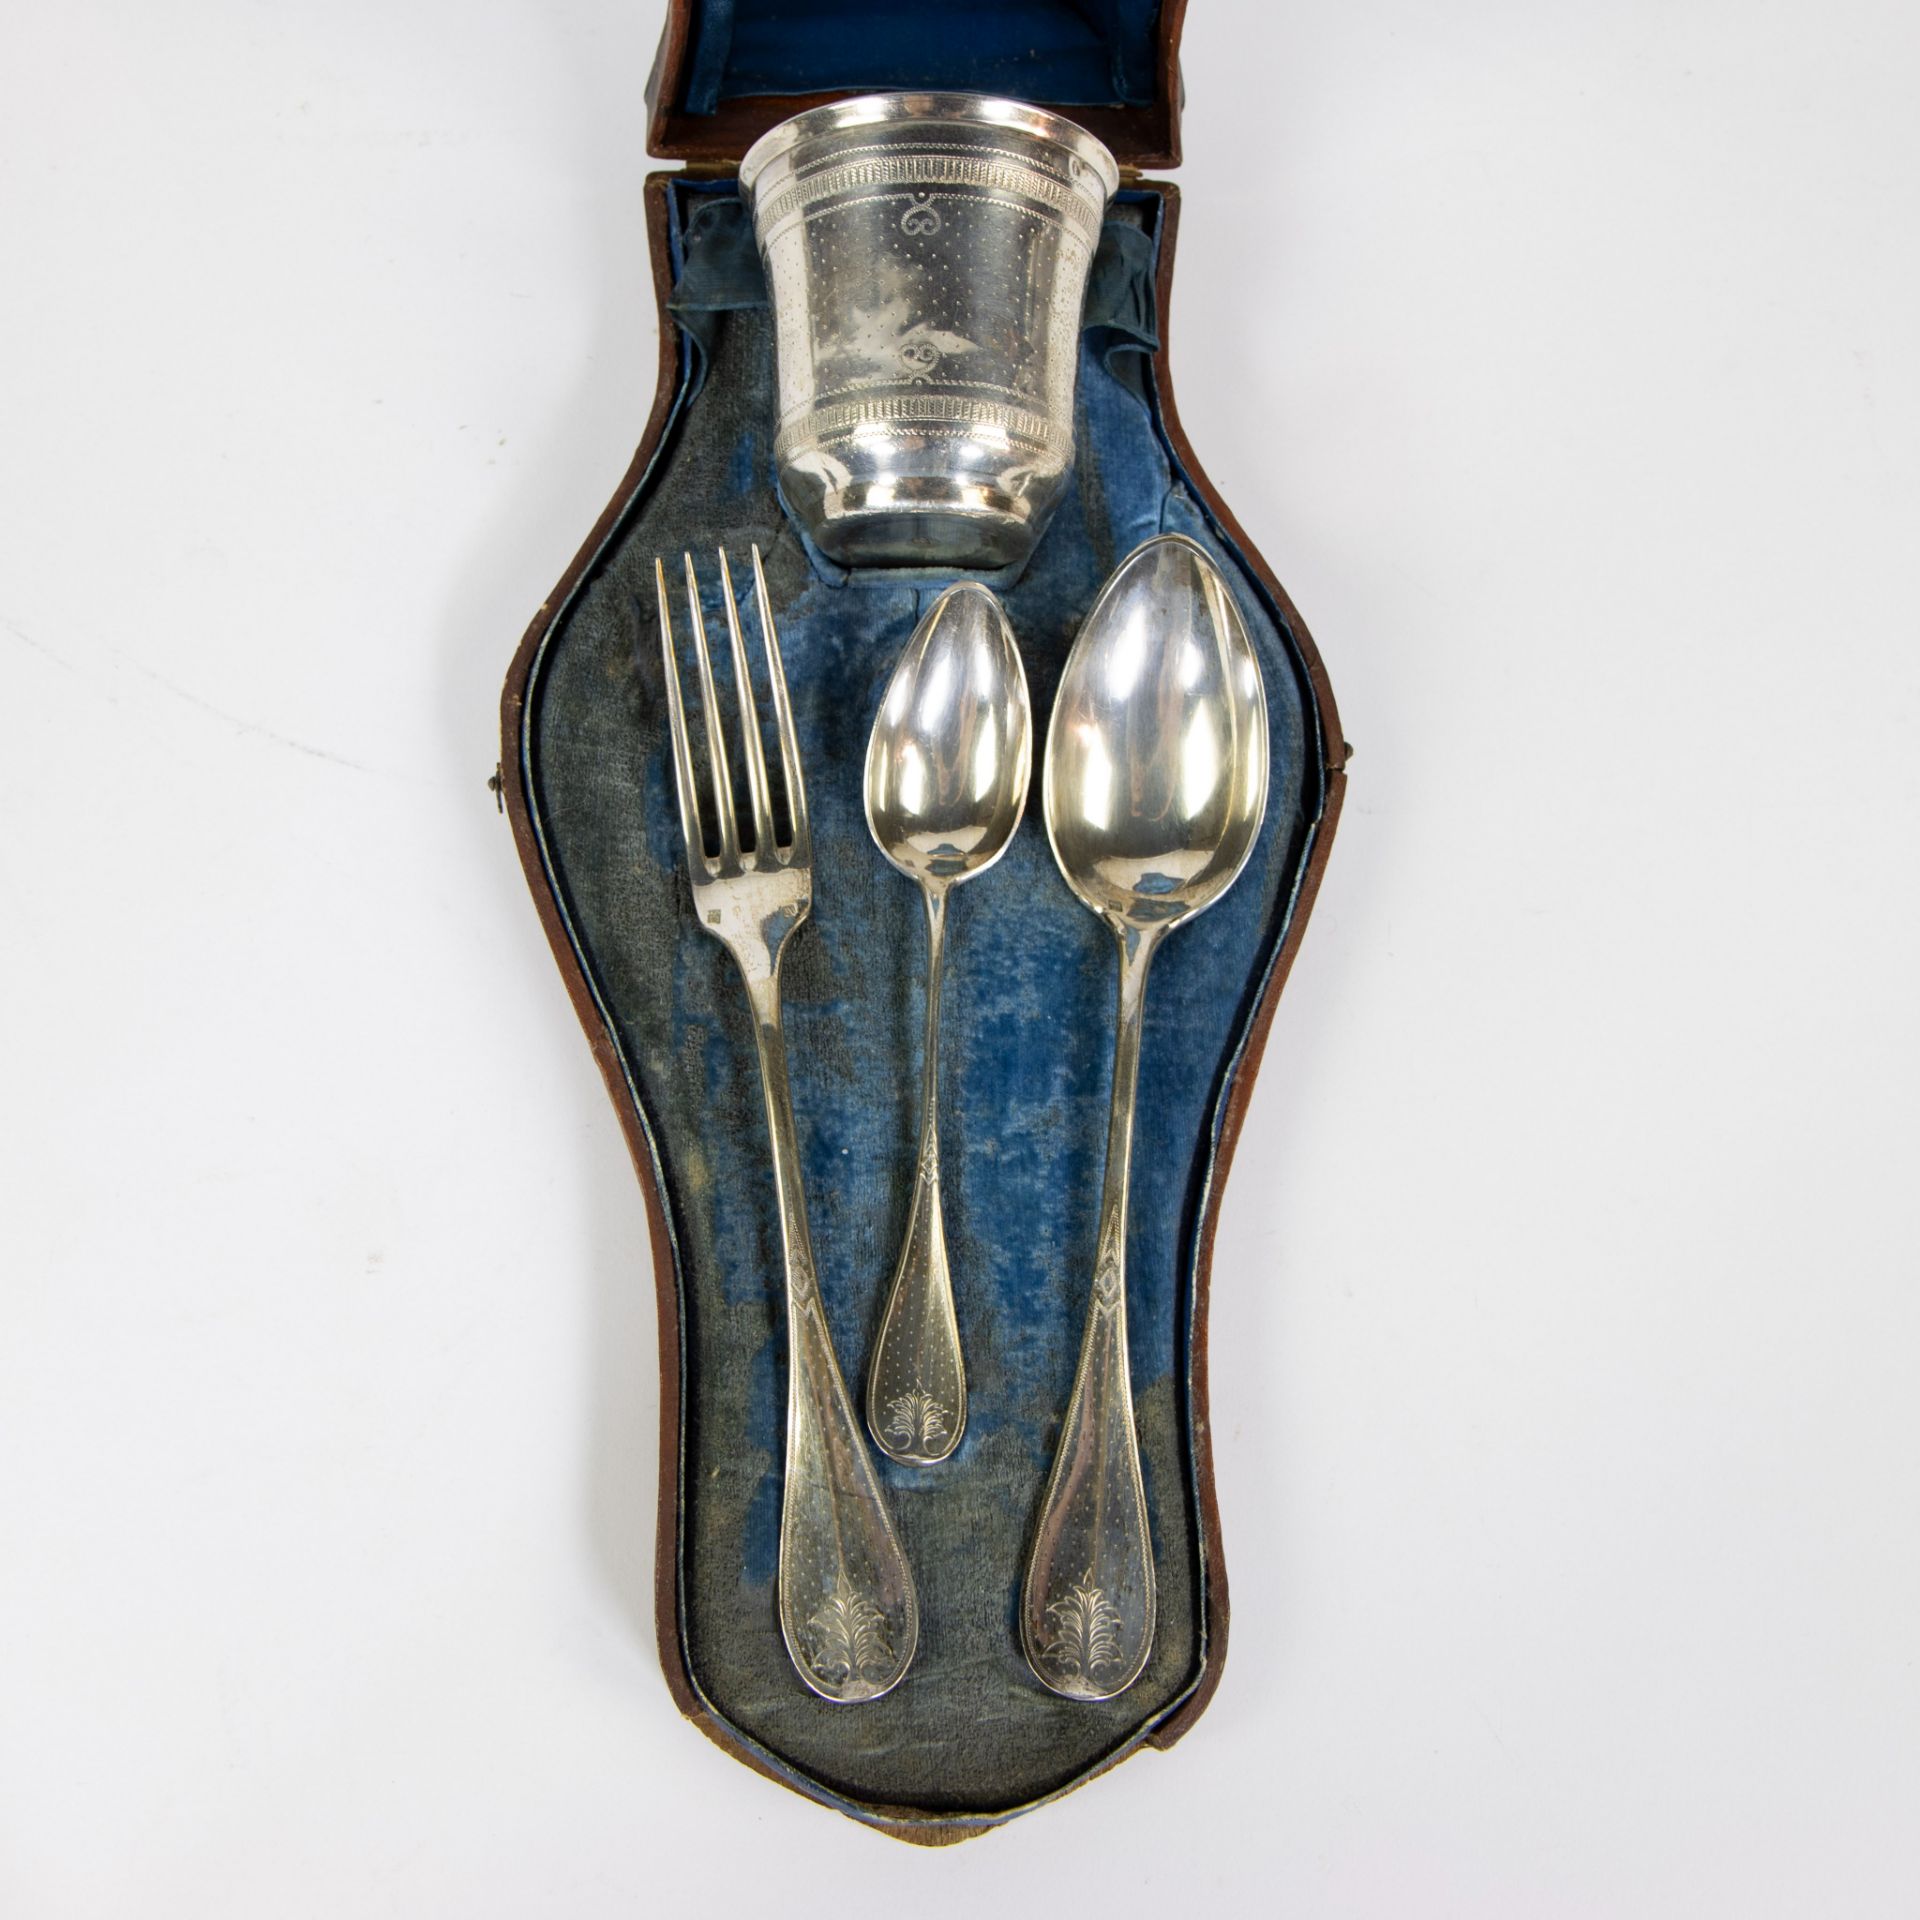 Etui silver cup French, cutlery DELHEID 19th century, mentioned in catalog exhibition Delheid - Image 3 of 3